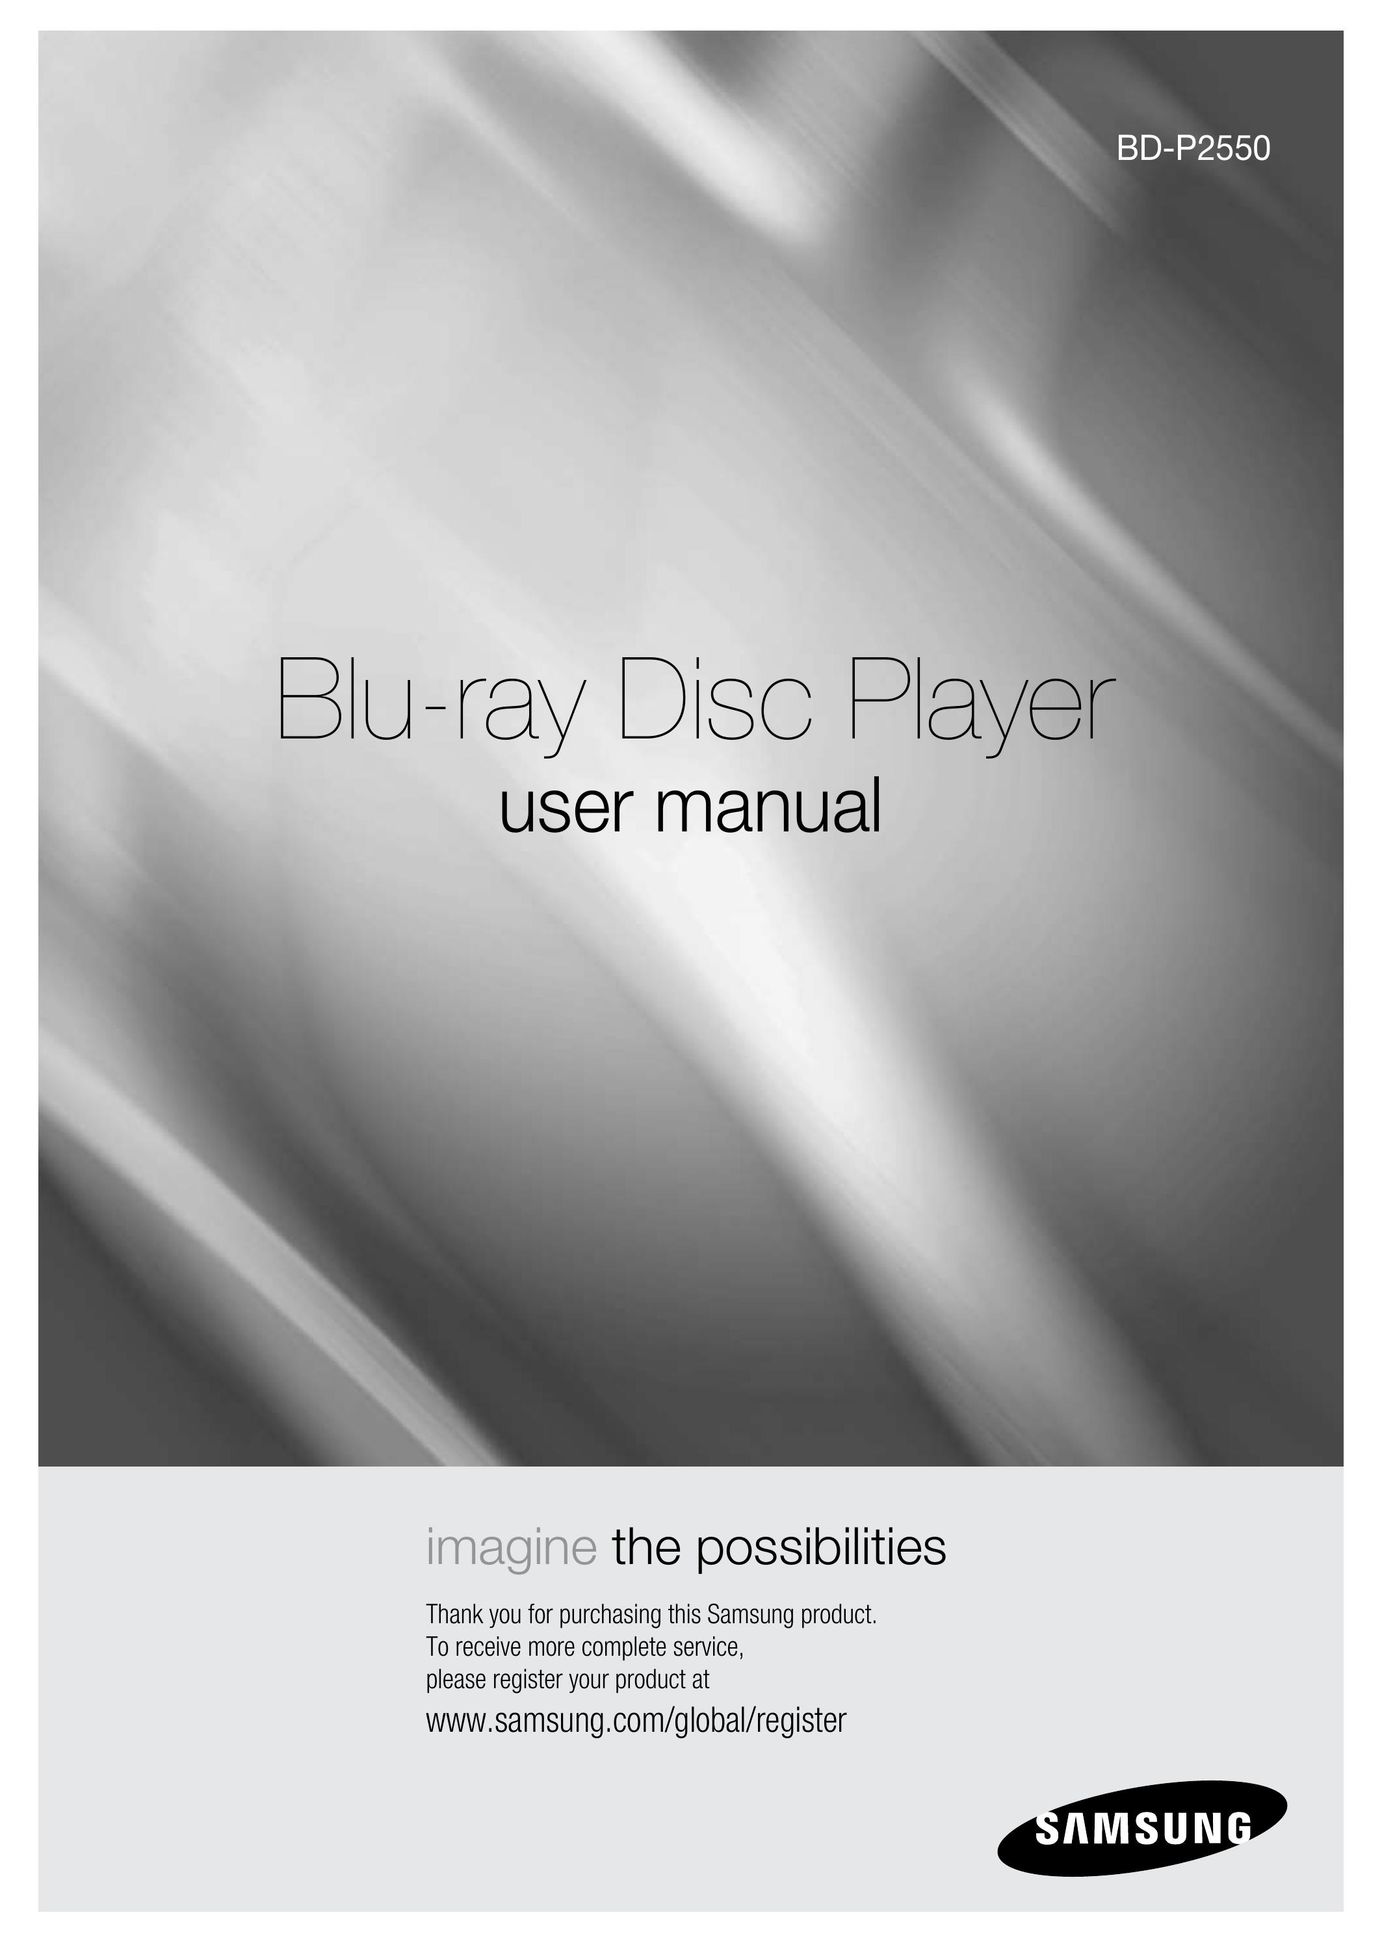 Samsung BD-P2550 DVD Player User Manual